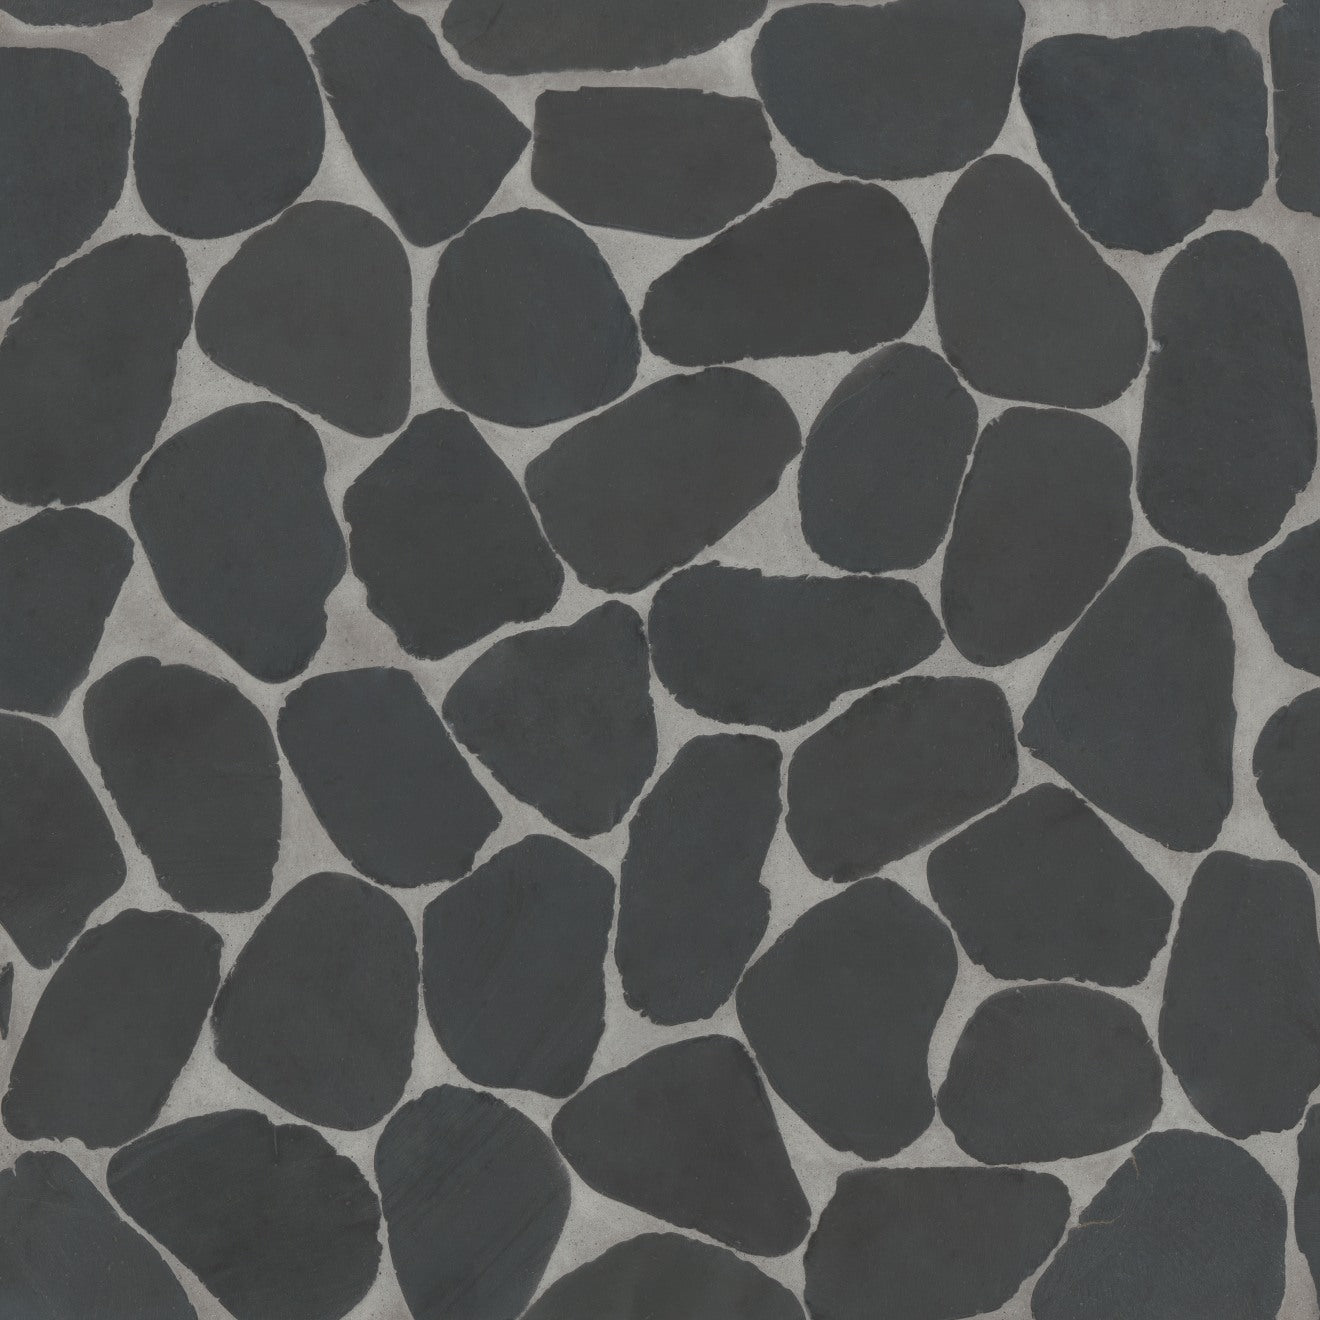 Waterbrook Sliced Pebble Stone Mosaic 12X12 Super Black